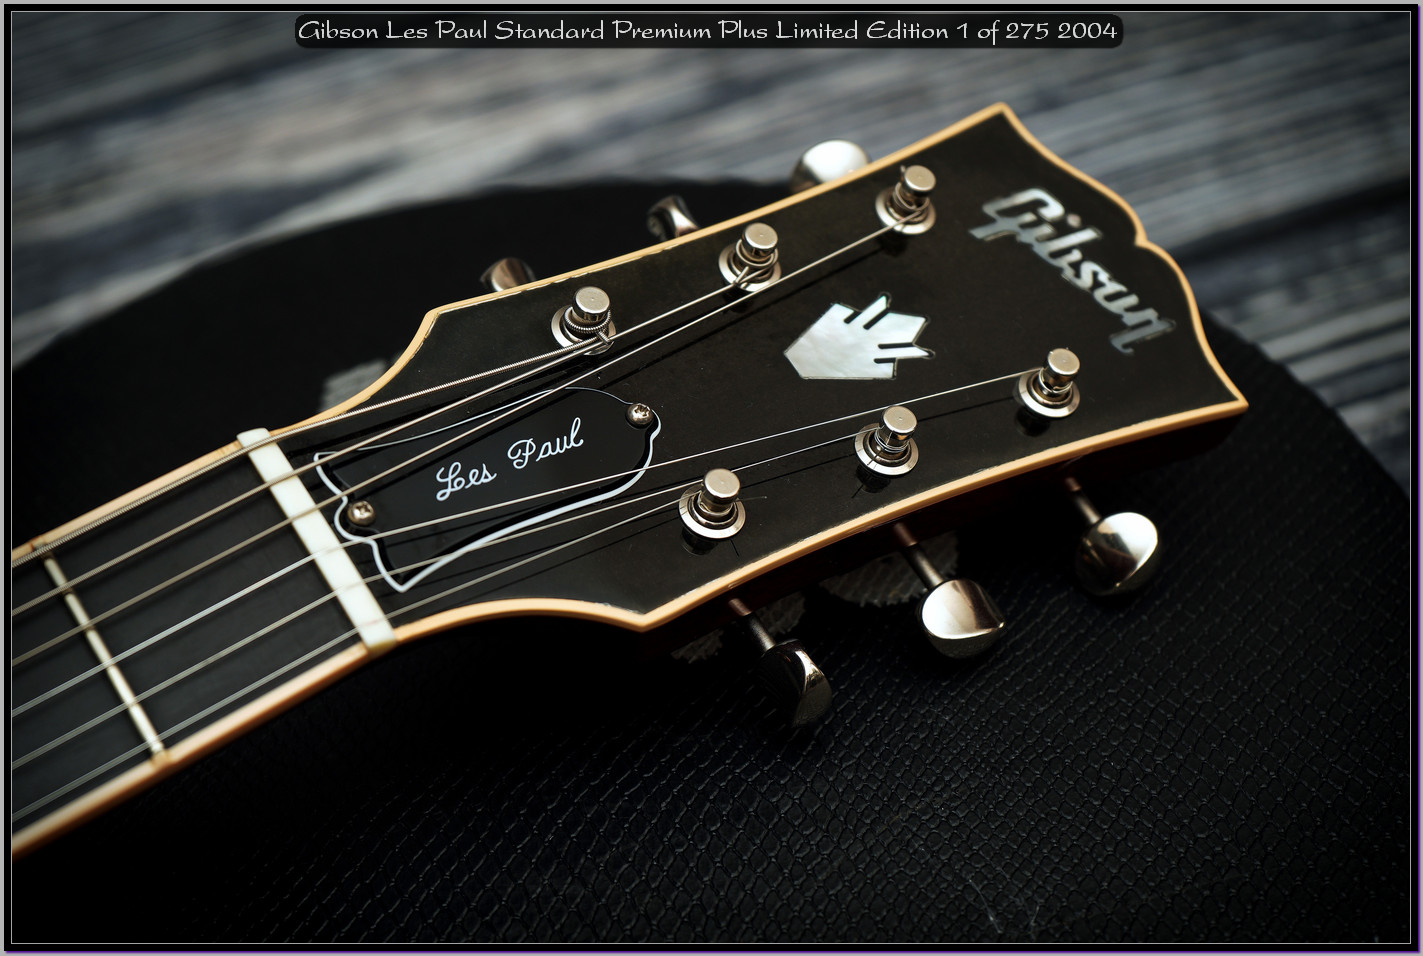 Gibson Les Paul Standard Premium Plus Limited Edition 1 of 275 2004 05_x1400.jpg